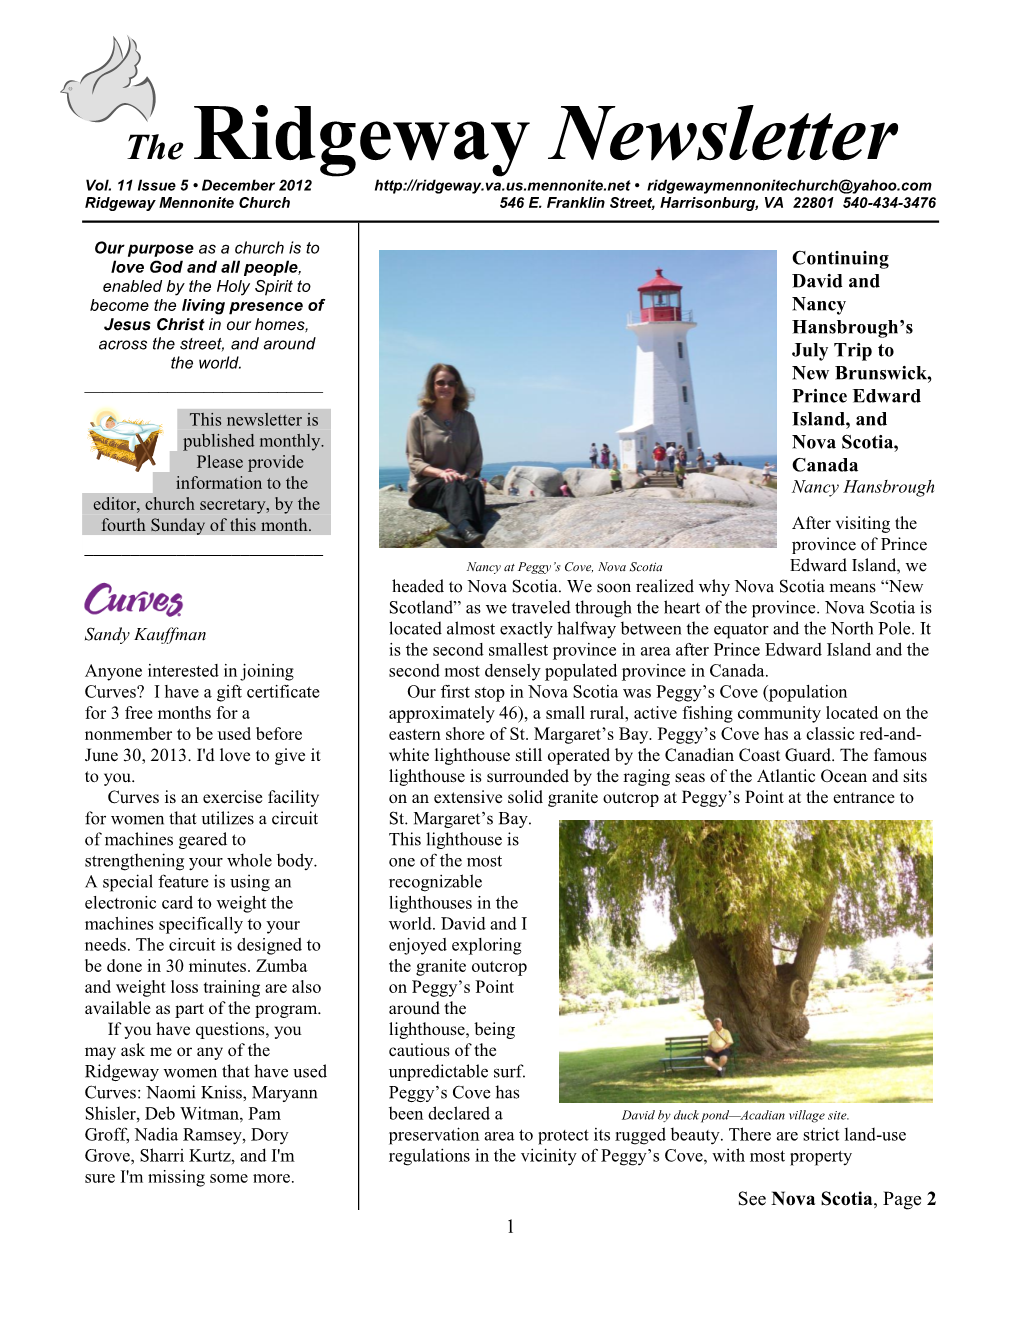 The Ridgeway Newsletter Vol